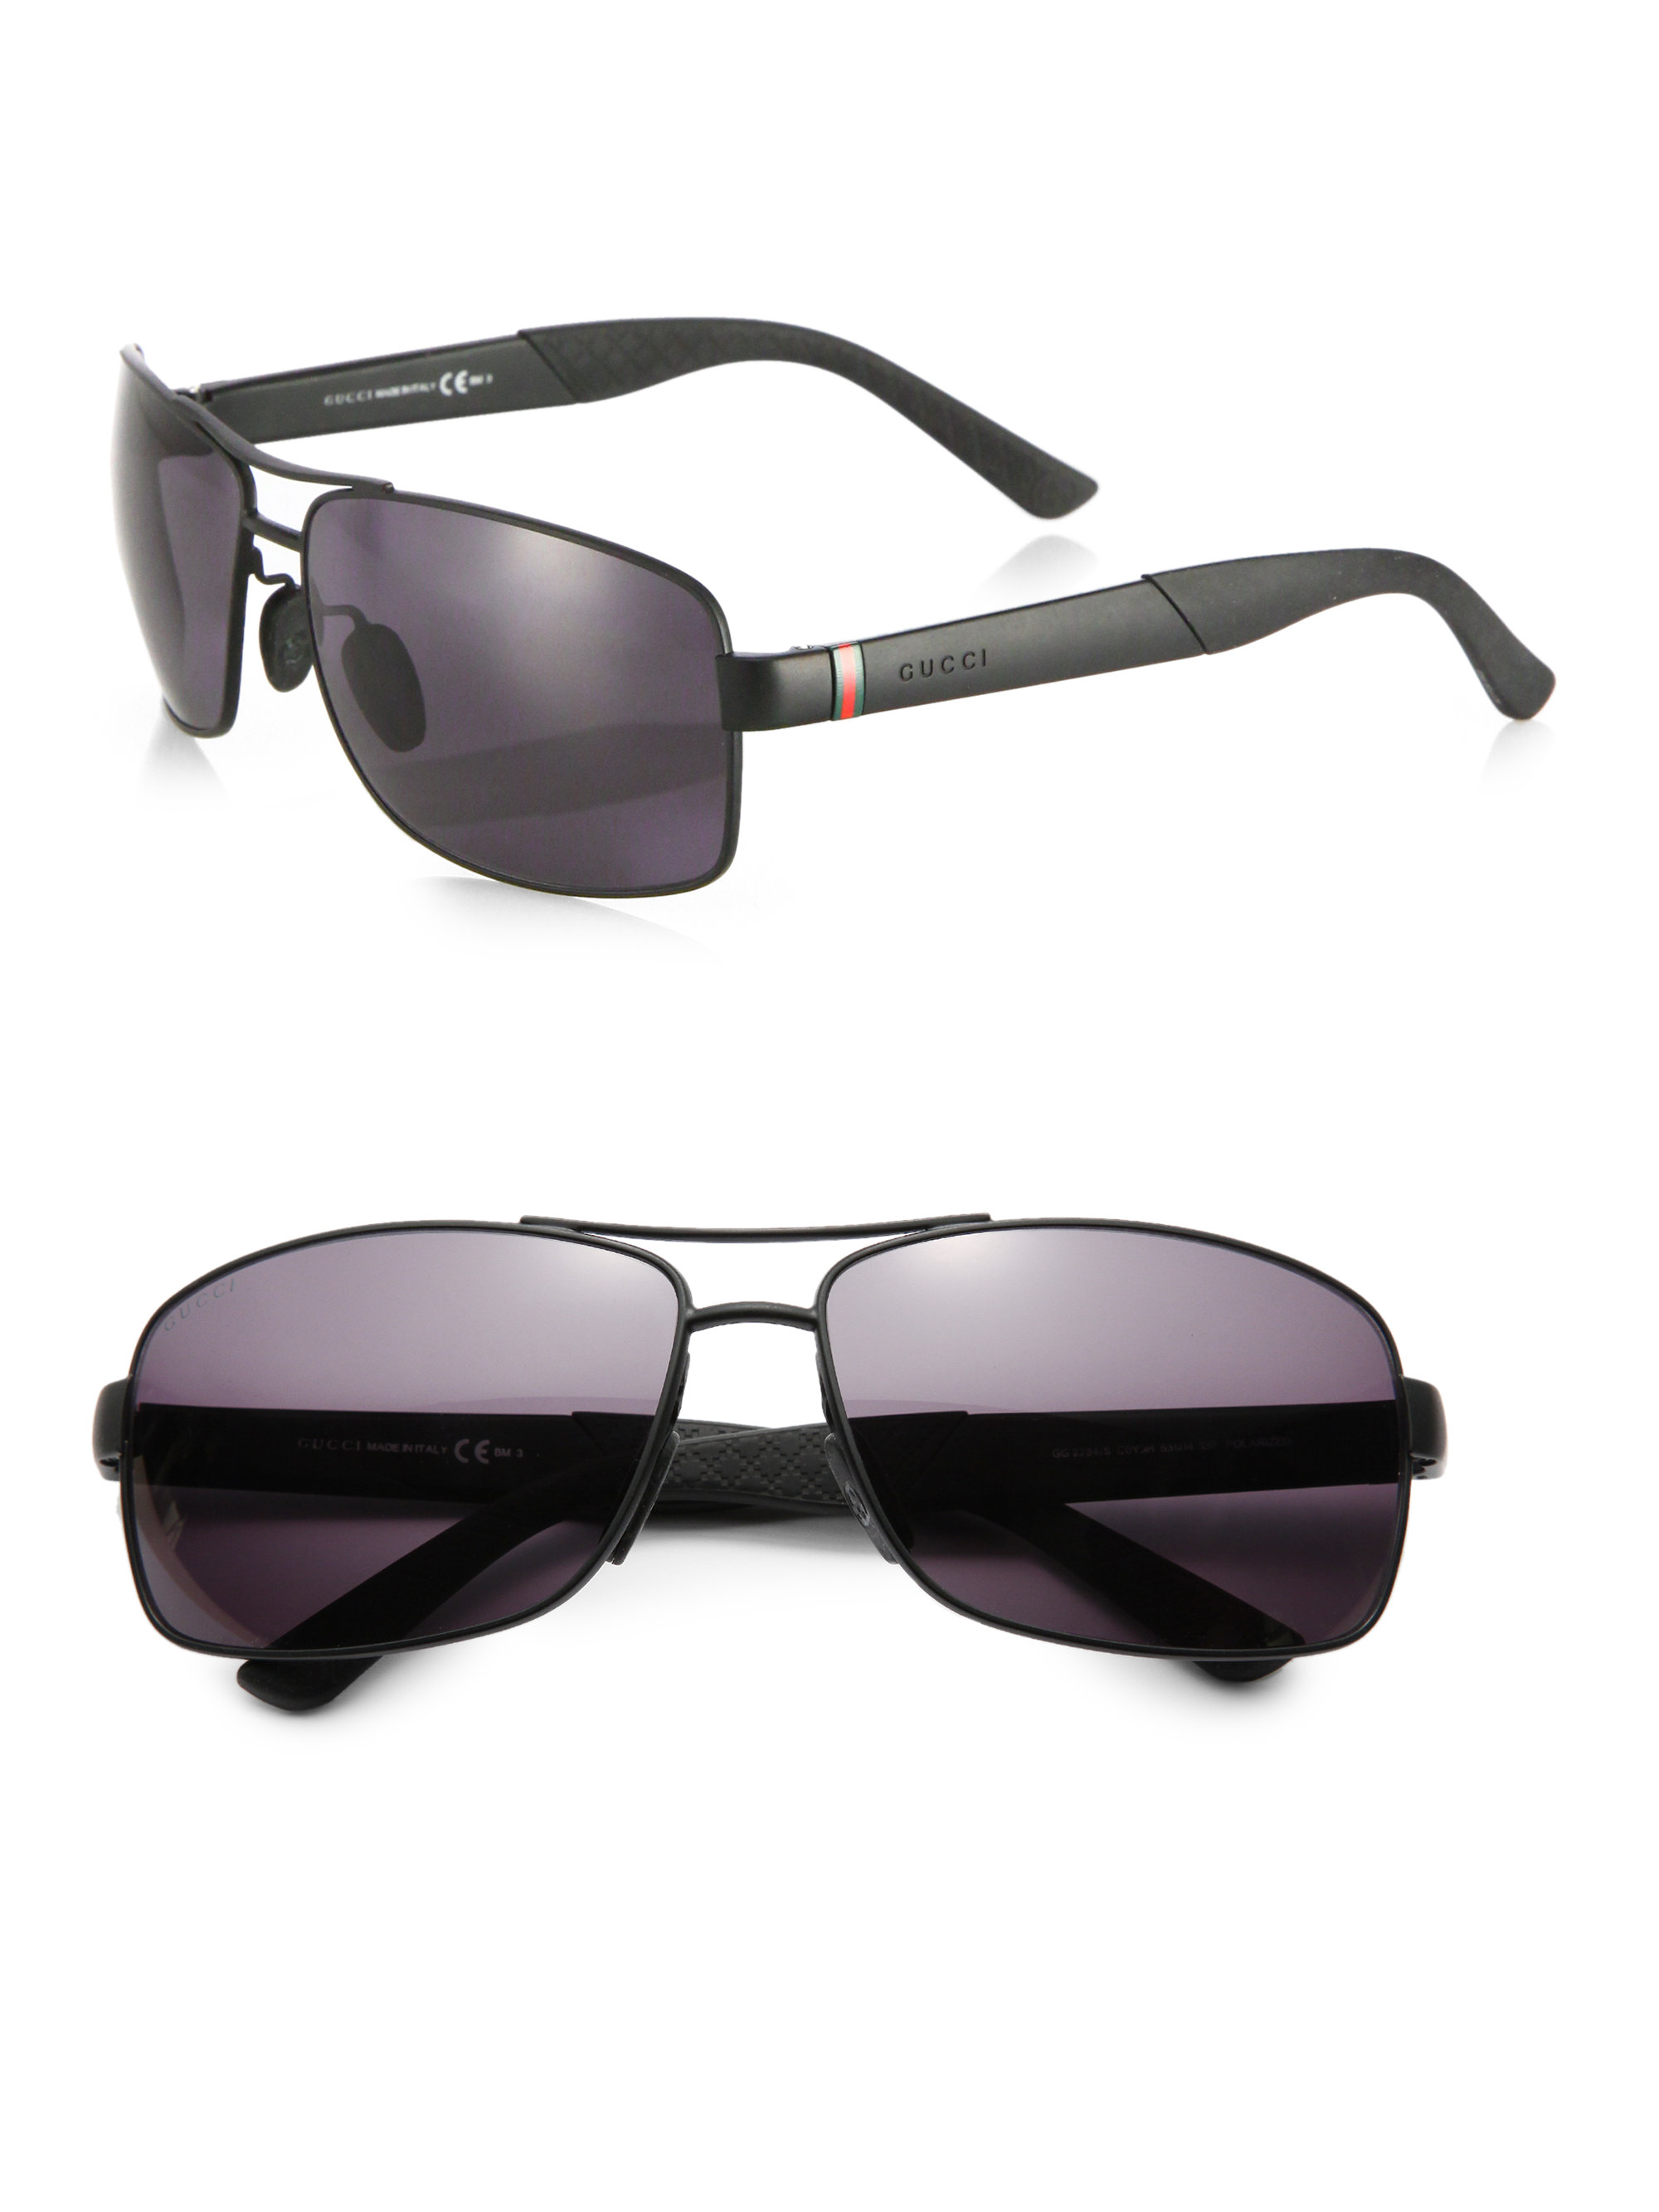 Gucci Rubber Sporty Aviator Sunglasses in Black for Men - Lyst